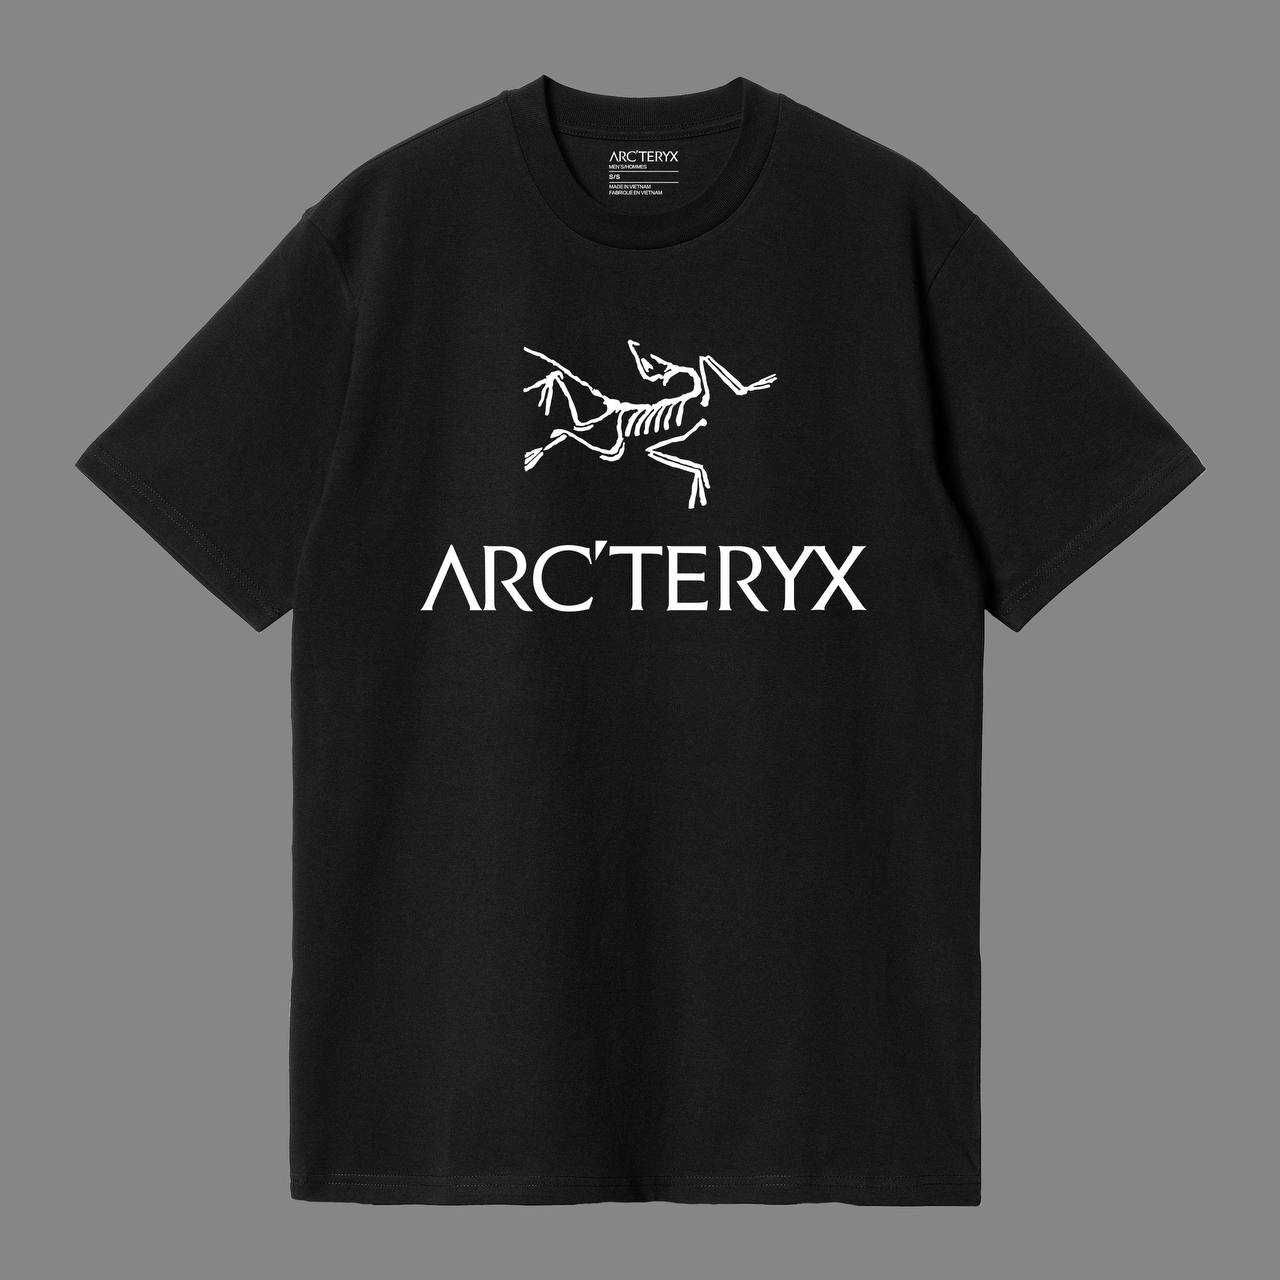 Футболка арктерикс артерикс arcteryx arteryx черная базовая